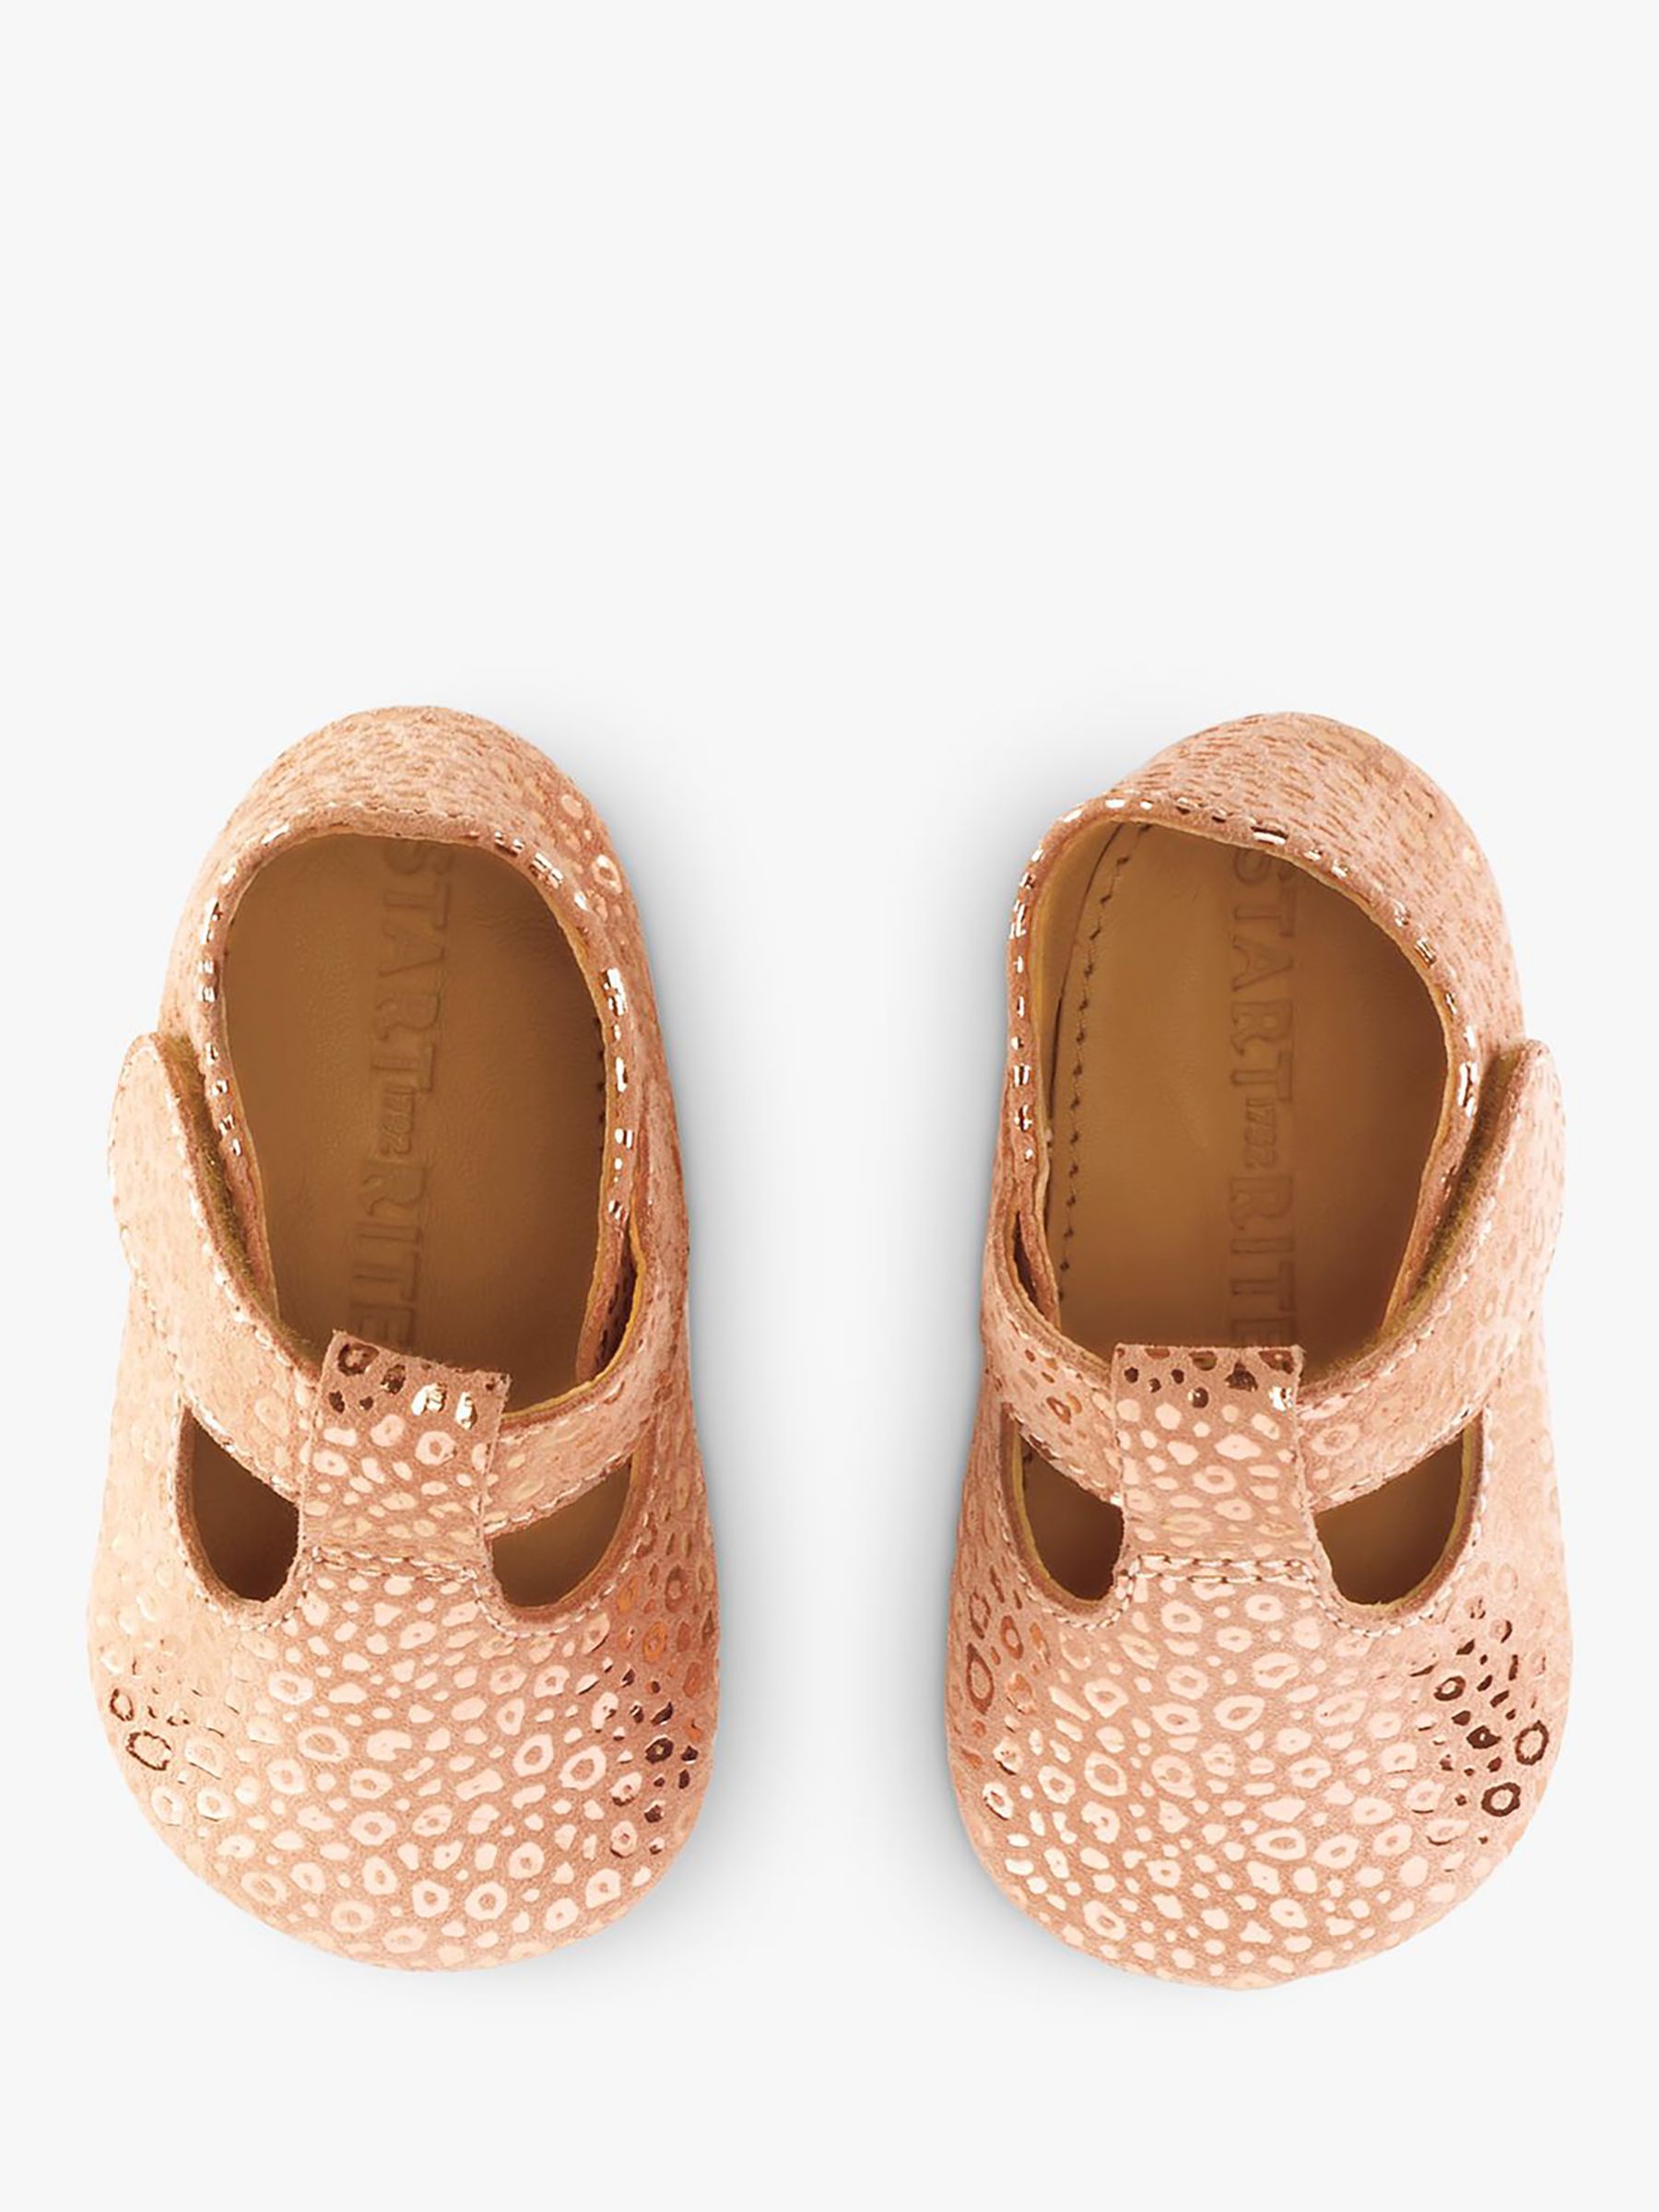 Start-Rite Kids' Rhyme Leopard Pre-Walker Shoes, Rose Gold, 0-3 months